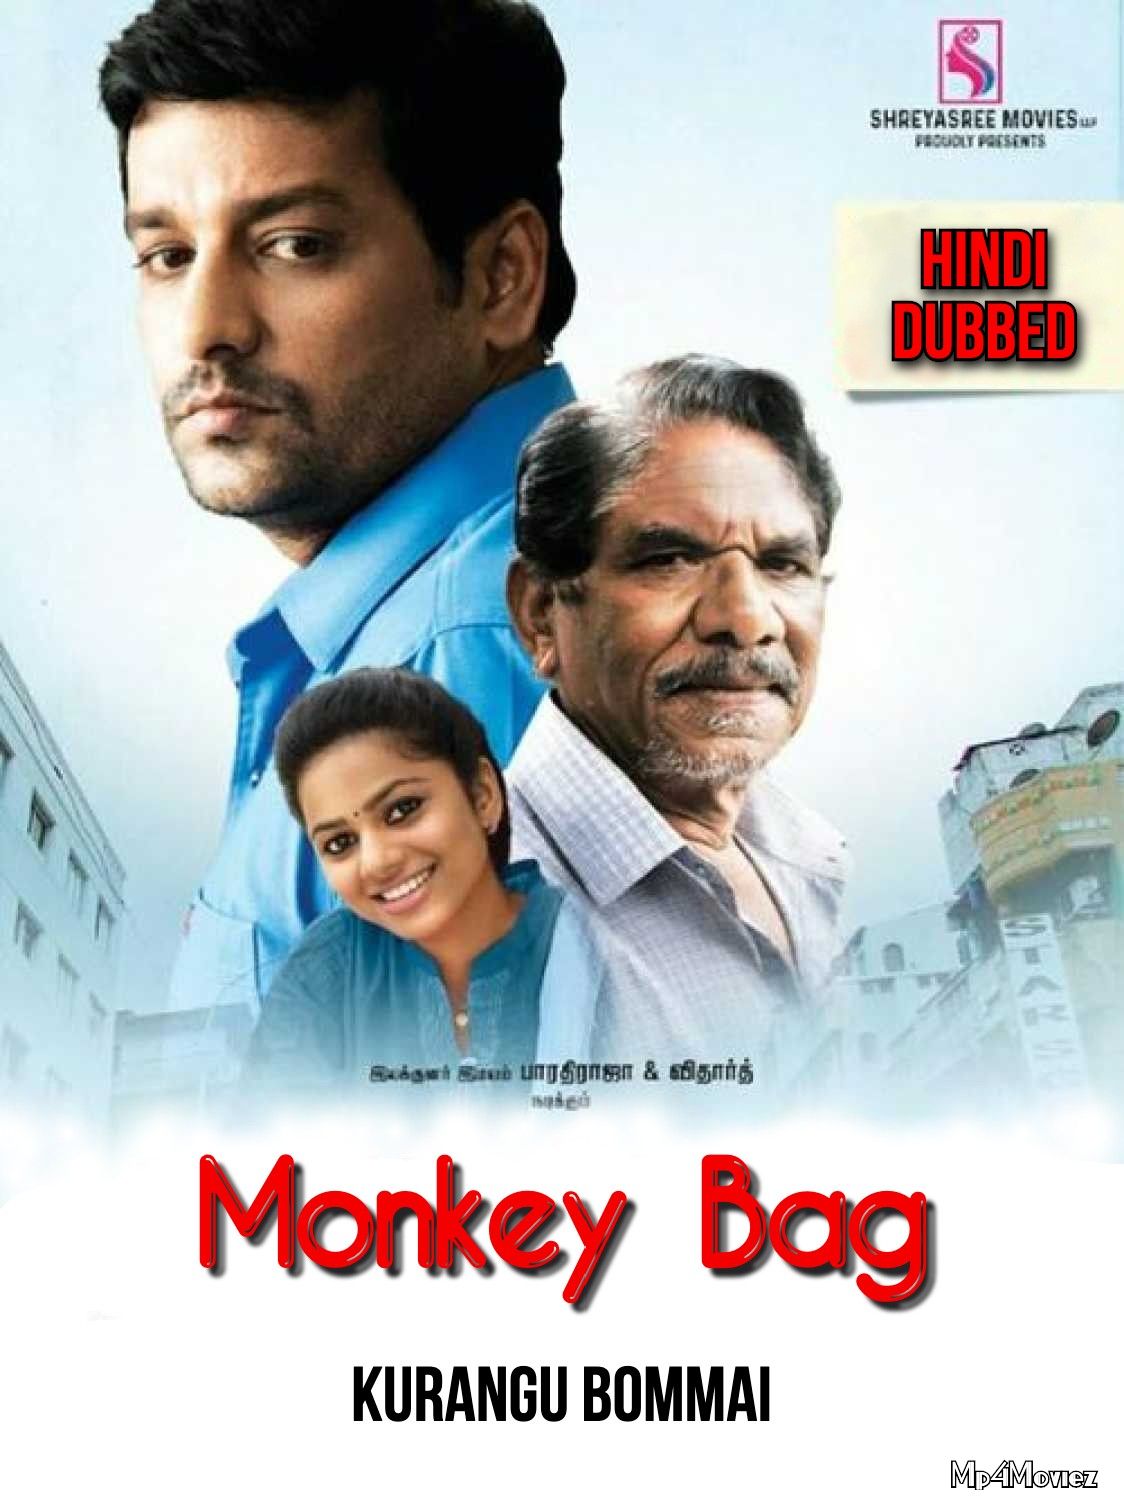 Monkey Bag (Kurangu Bommai) 2020 UNCUT Hindi Dubbed Movie download full movie